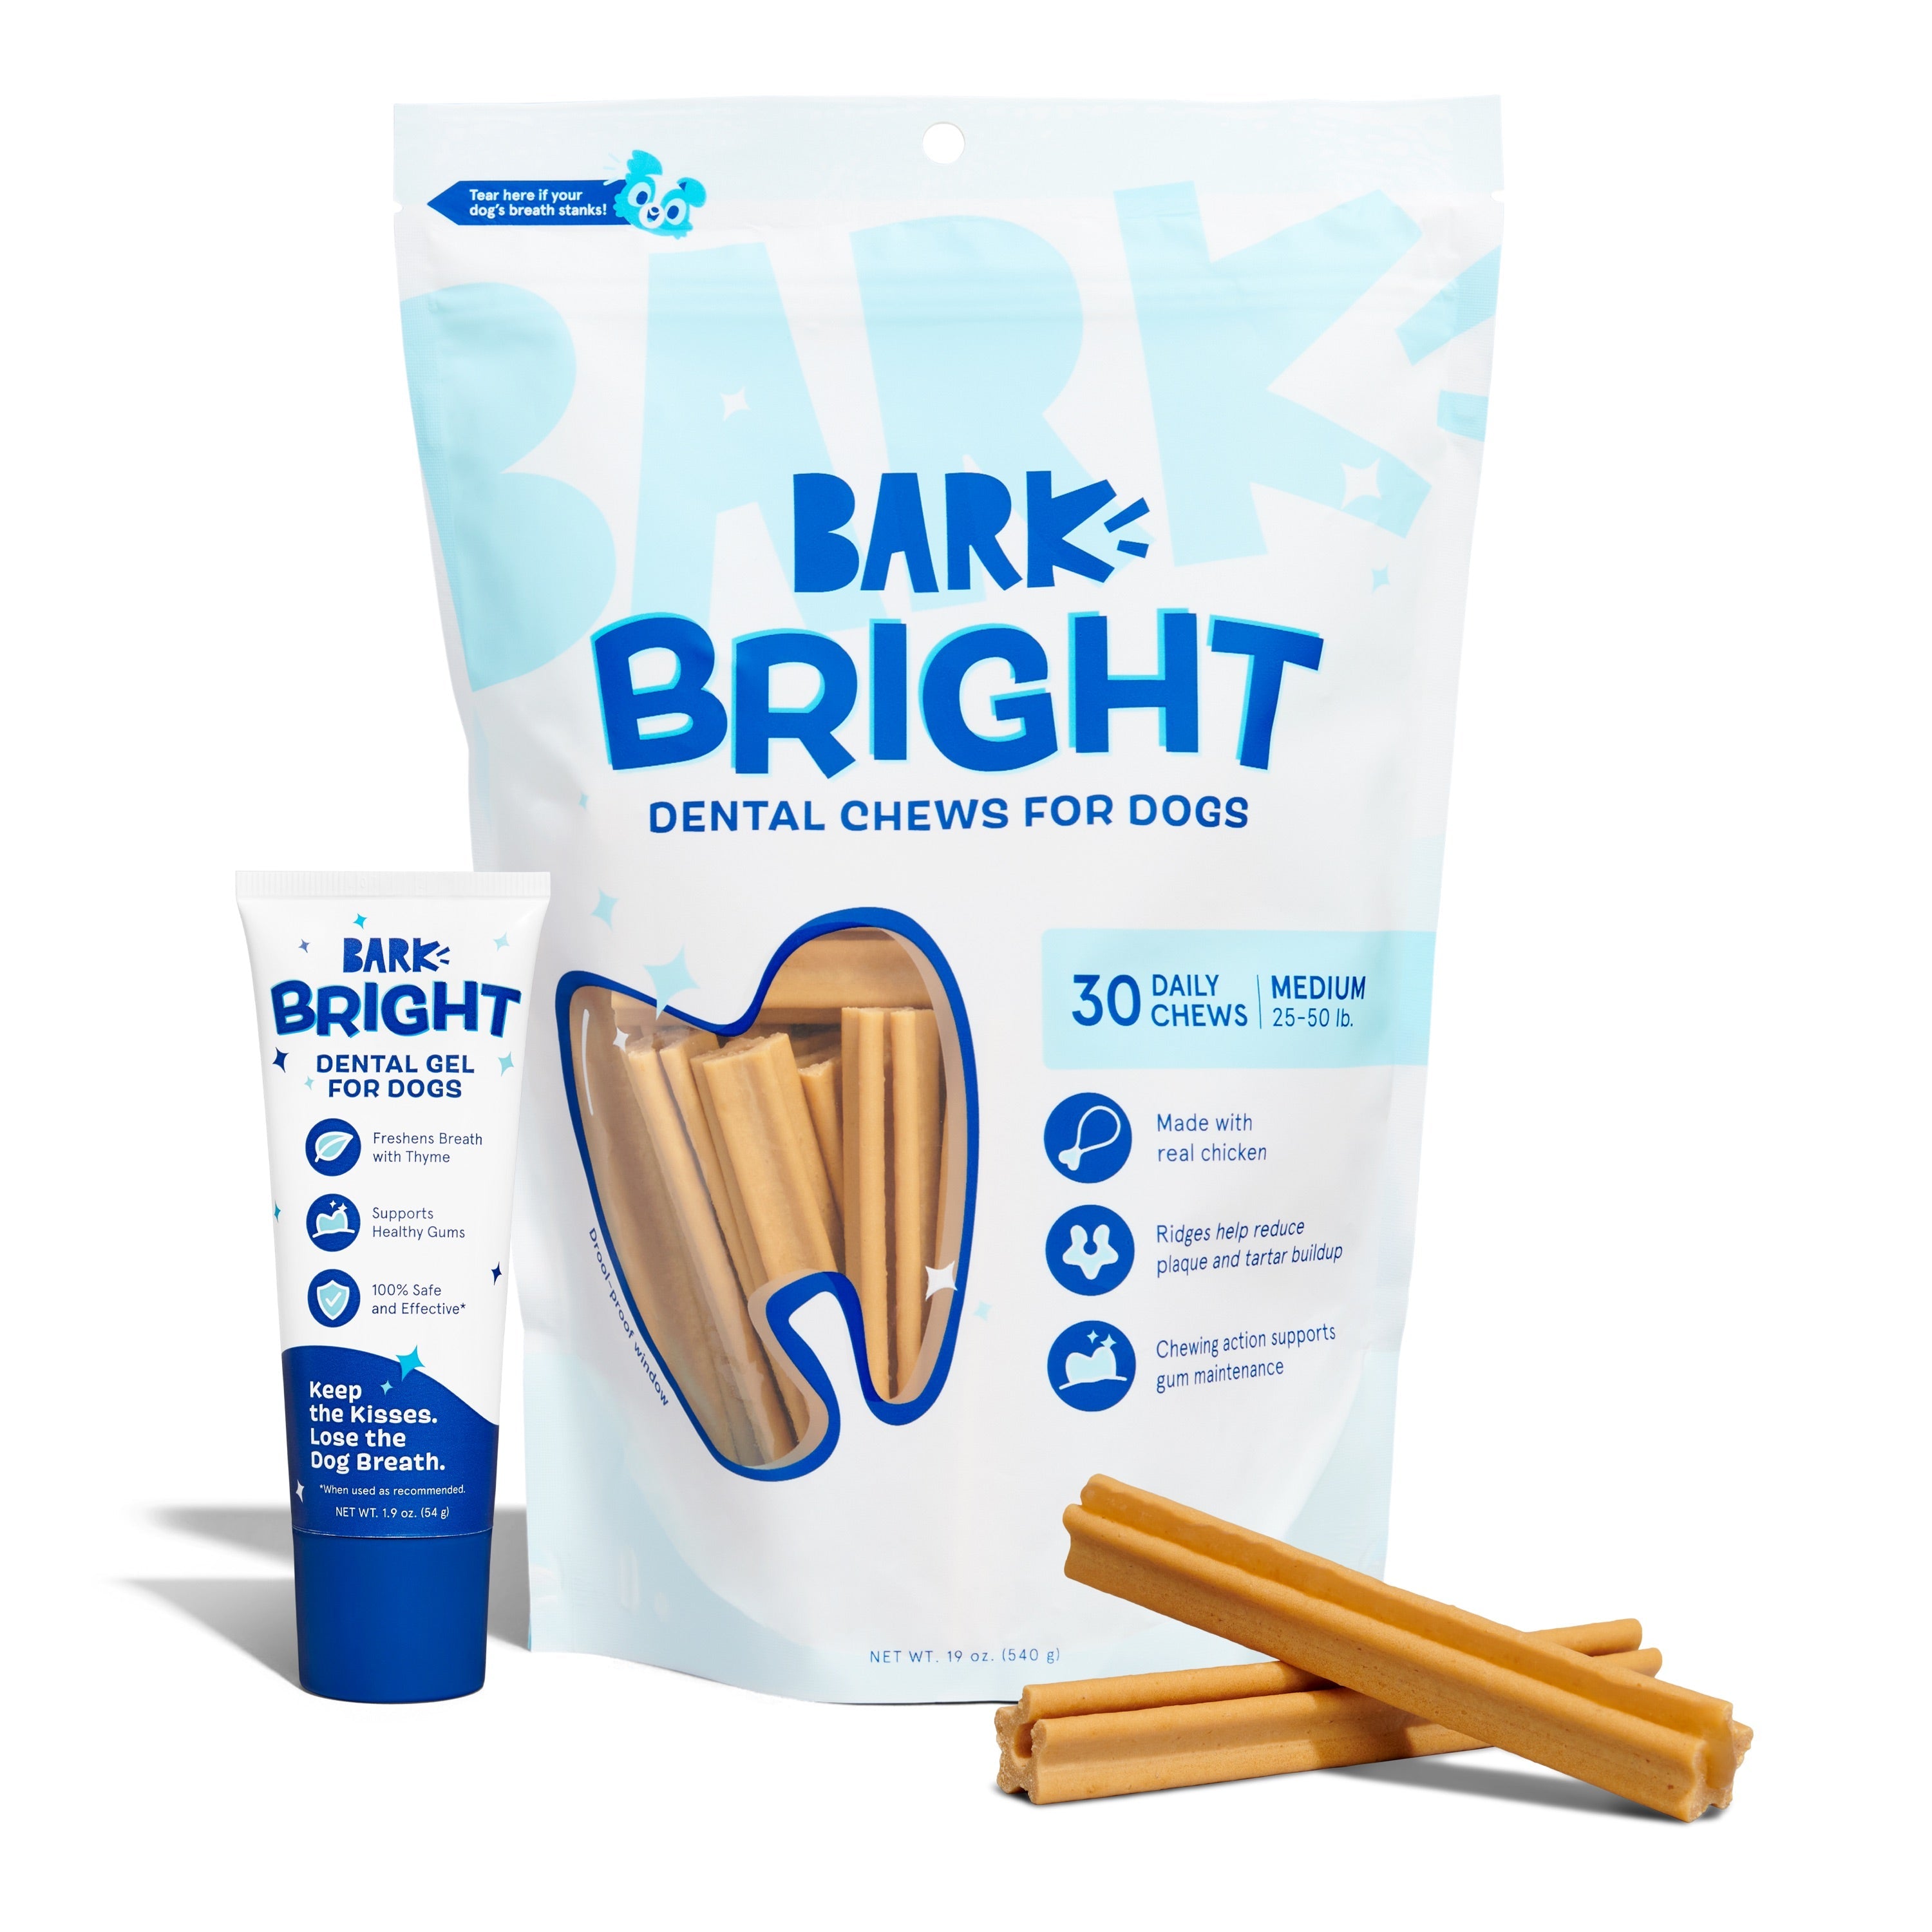 The Bright Dental Kit